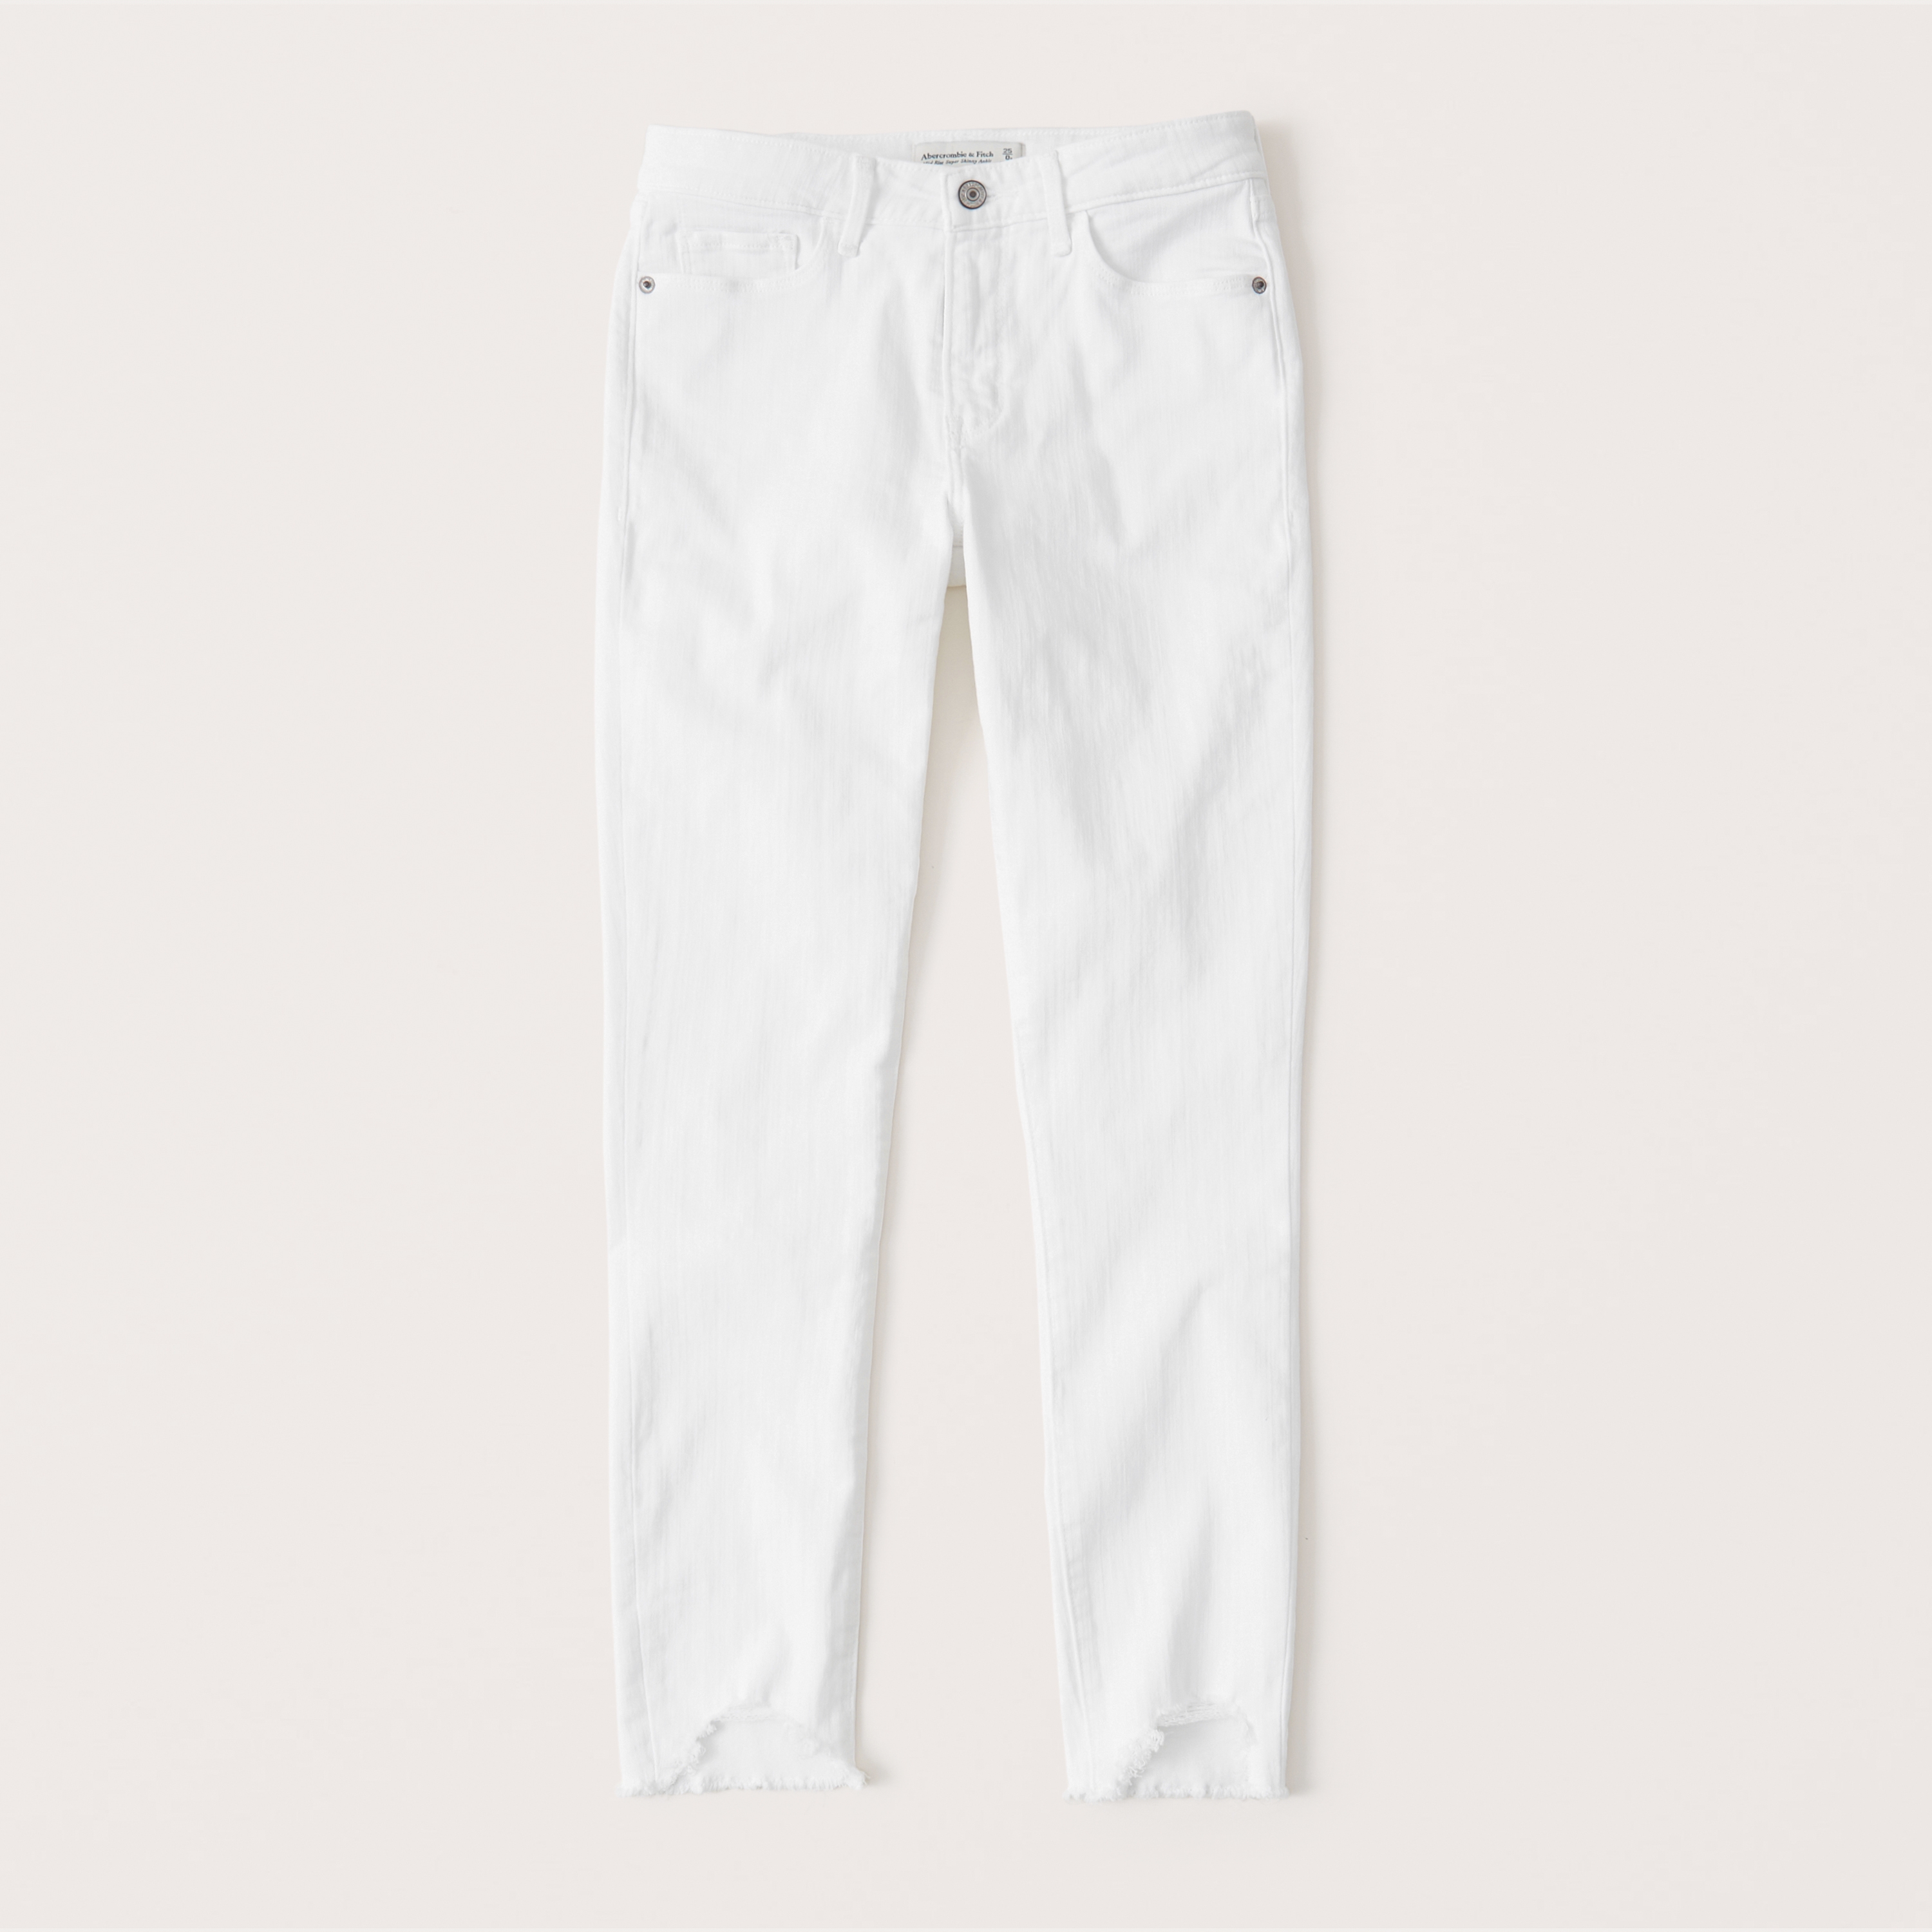 abercrombie white jeans